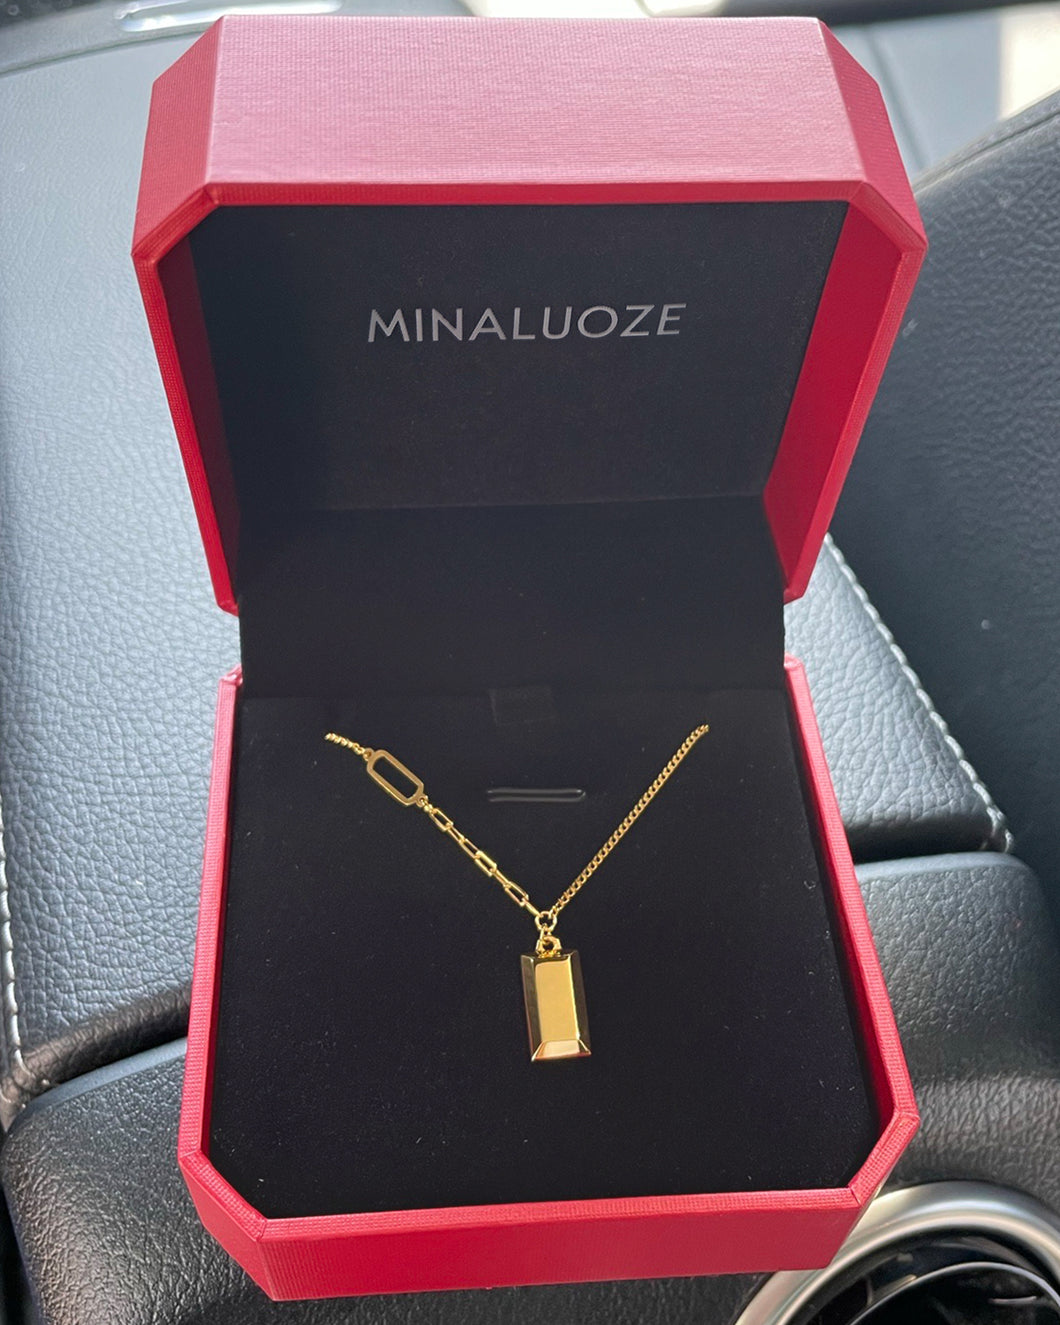 MINALUOZE Pendant Necklace for Women, Fashion Jewelry, 14k Gold-Plated Brass